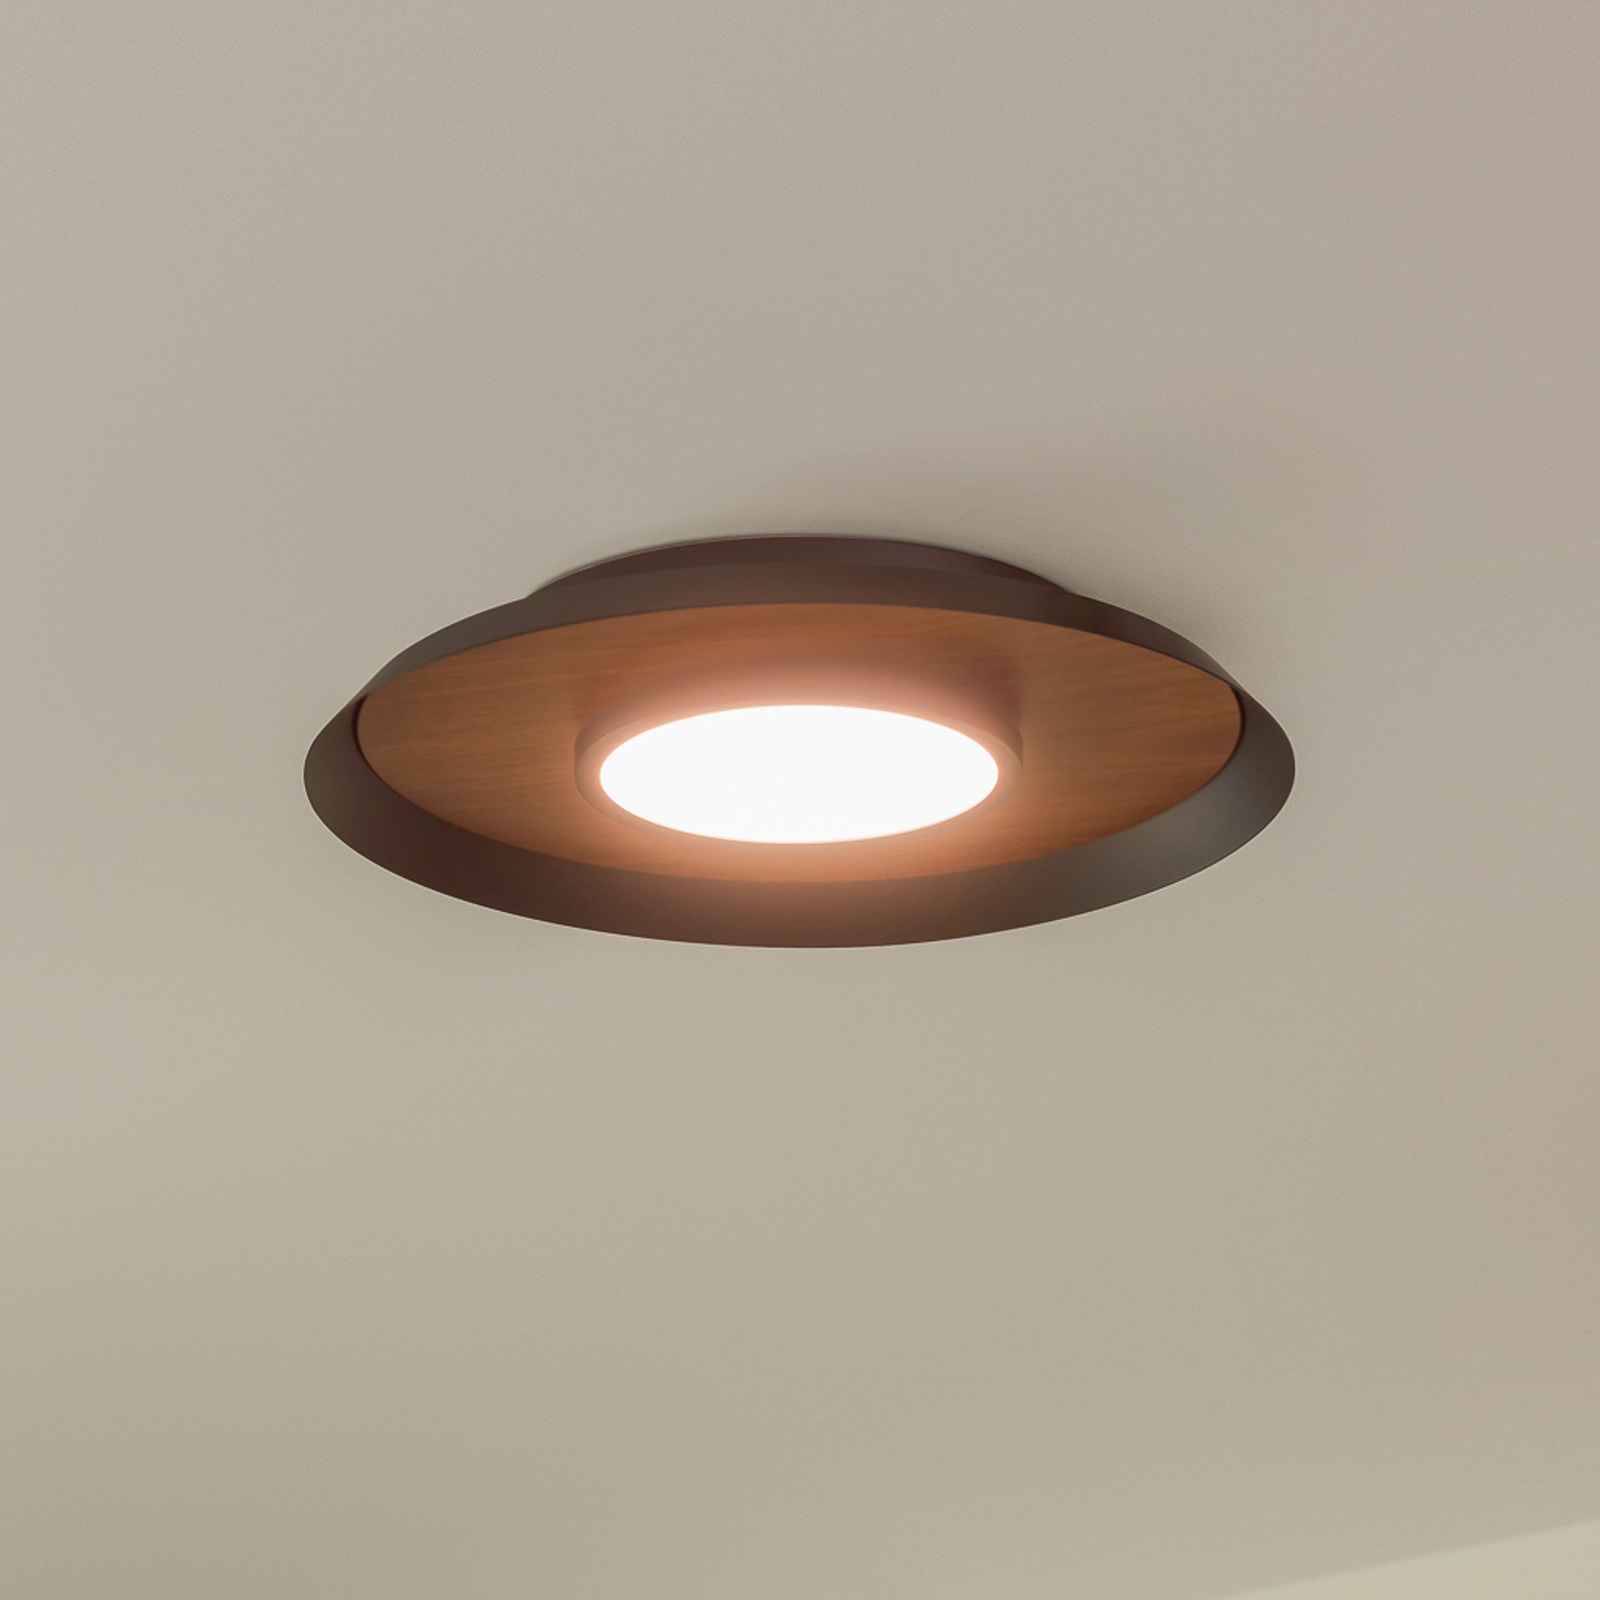 Lucande Merilla ceiling light, veneer wood